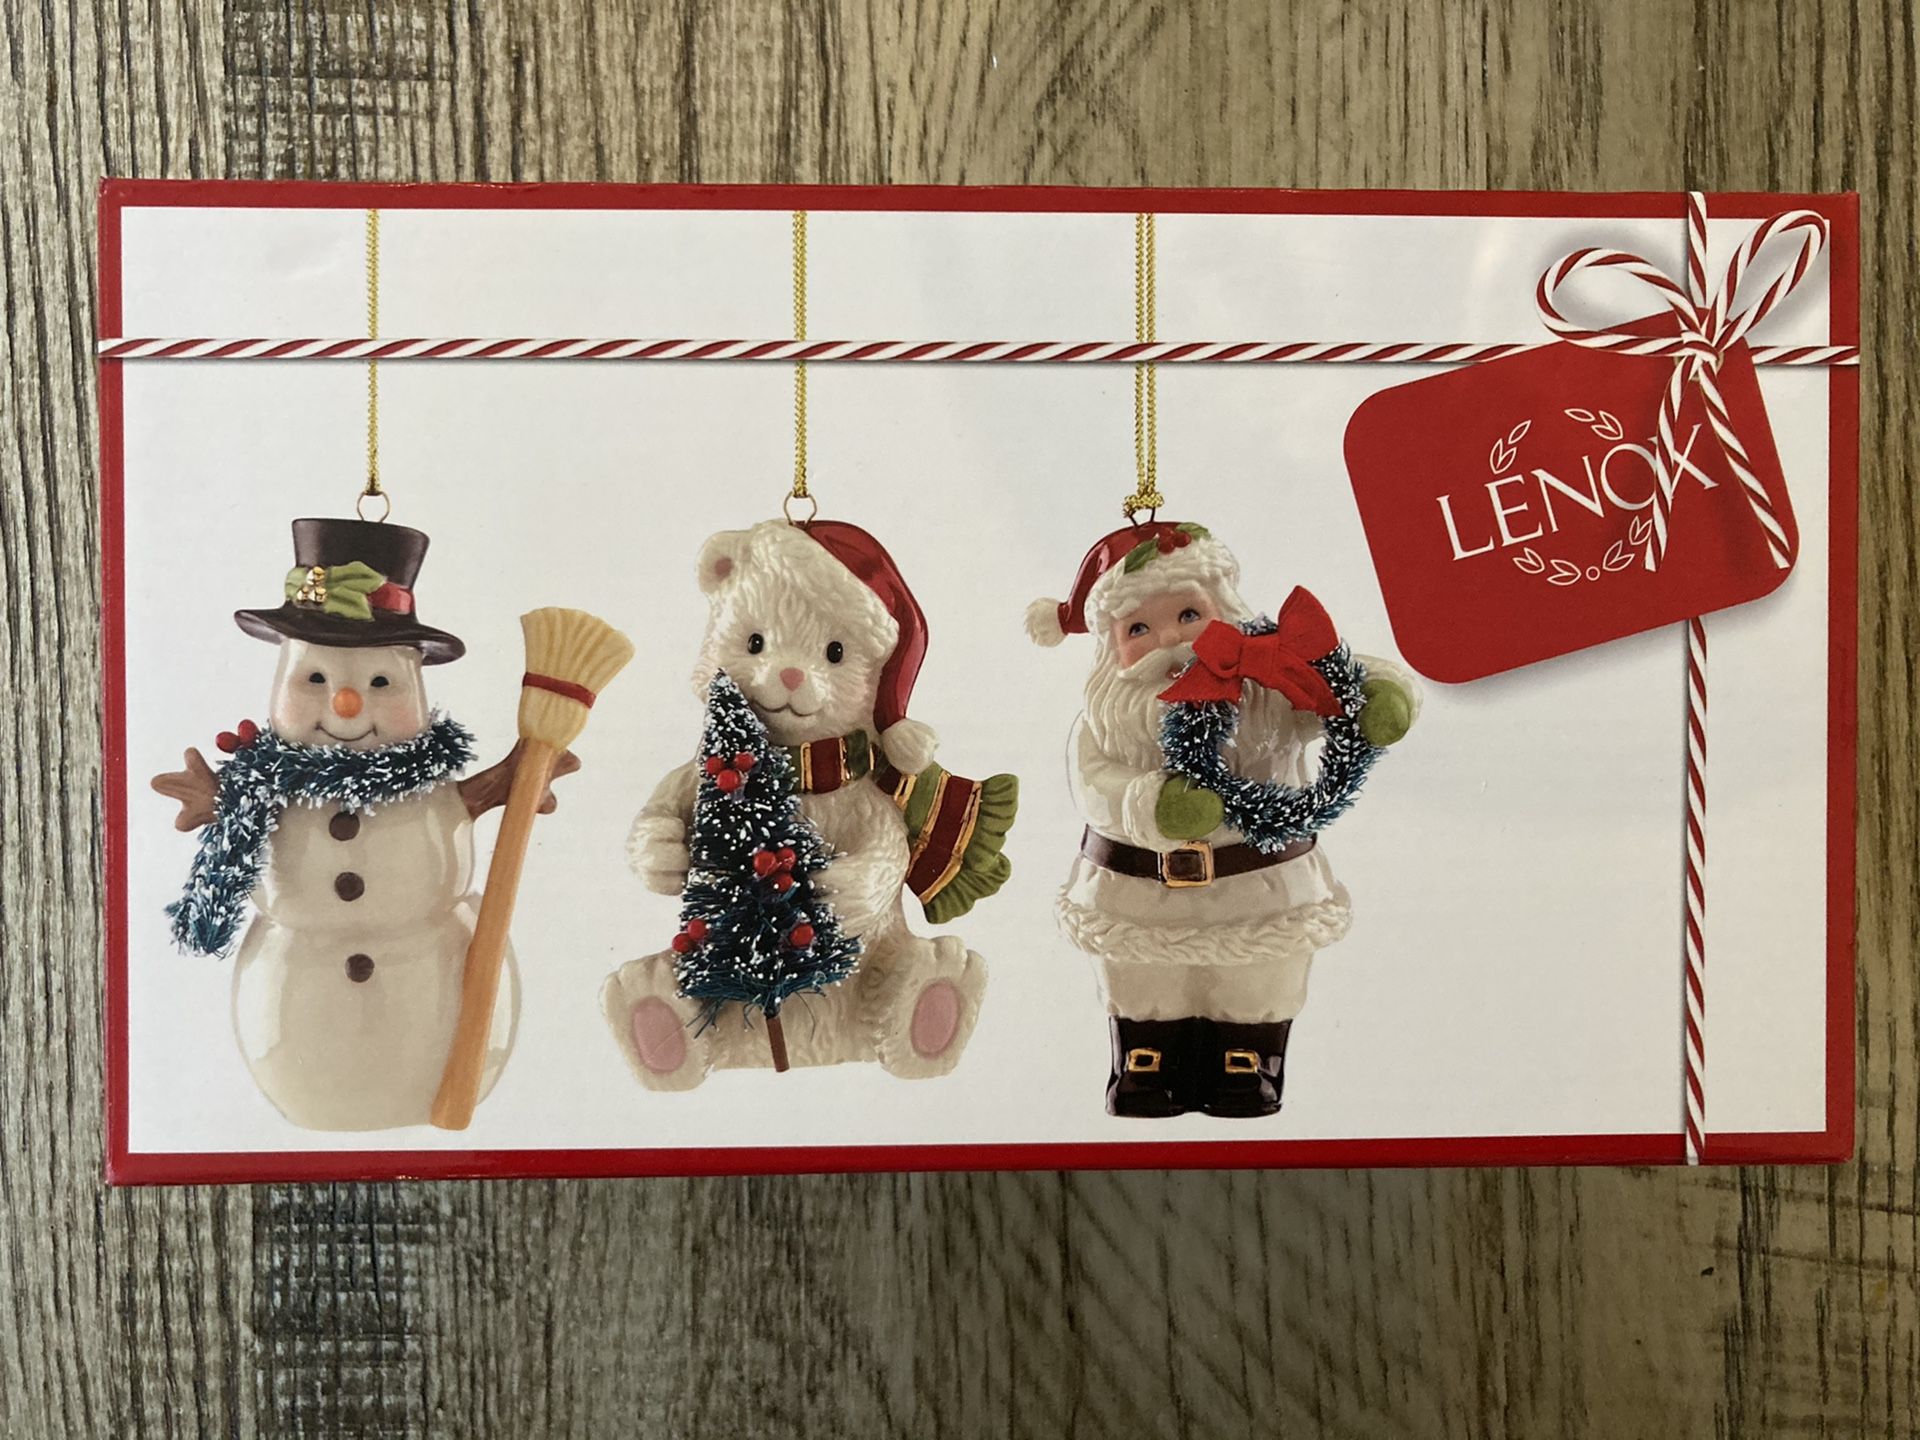 3 new Lenox Christmas ornaments